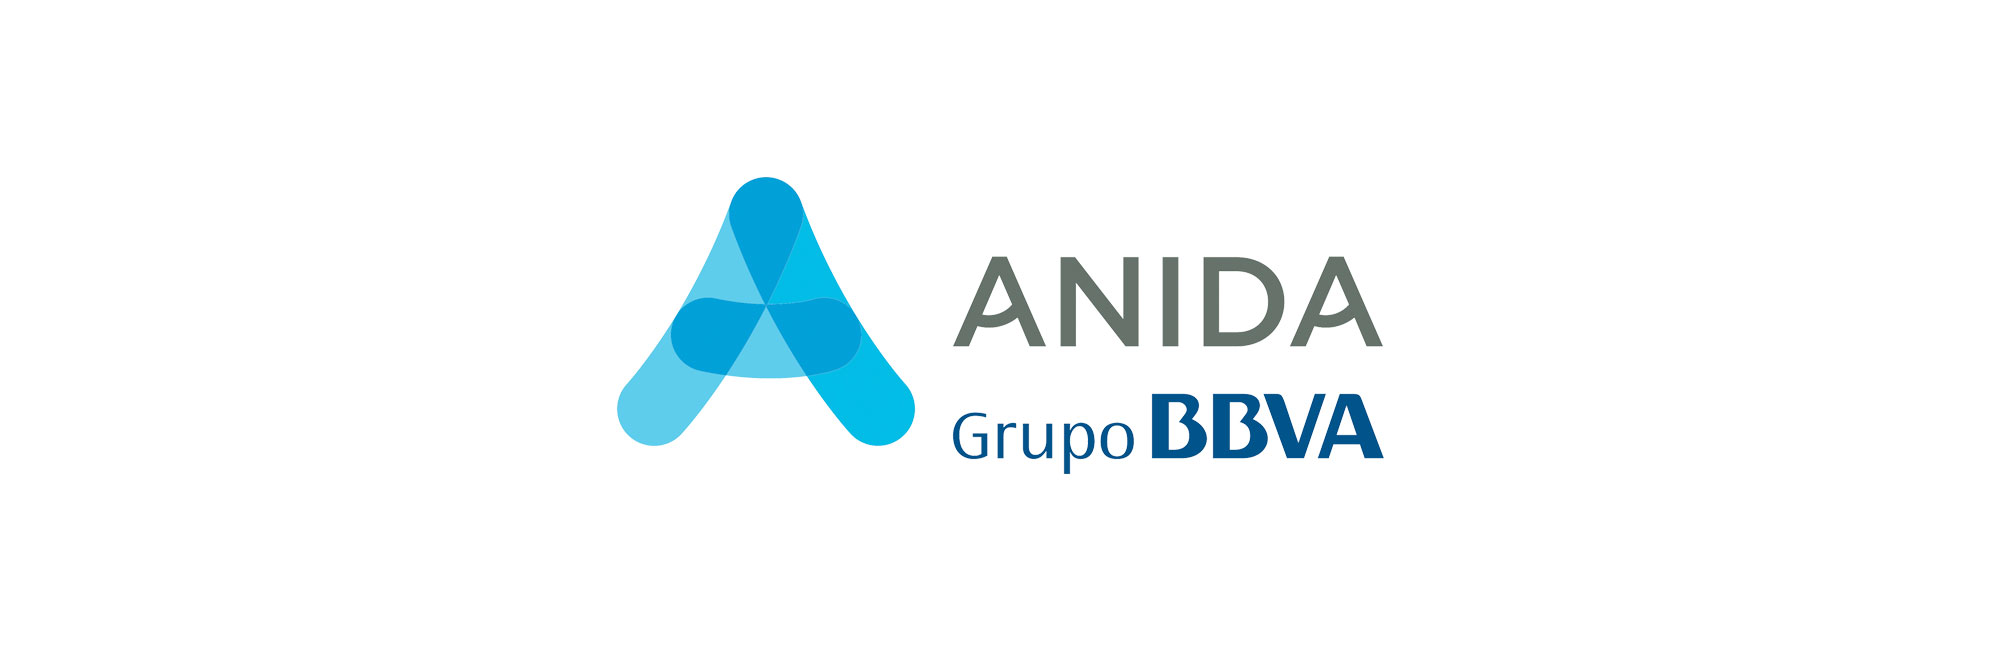 Grupo BBVA- Anida logo